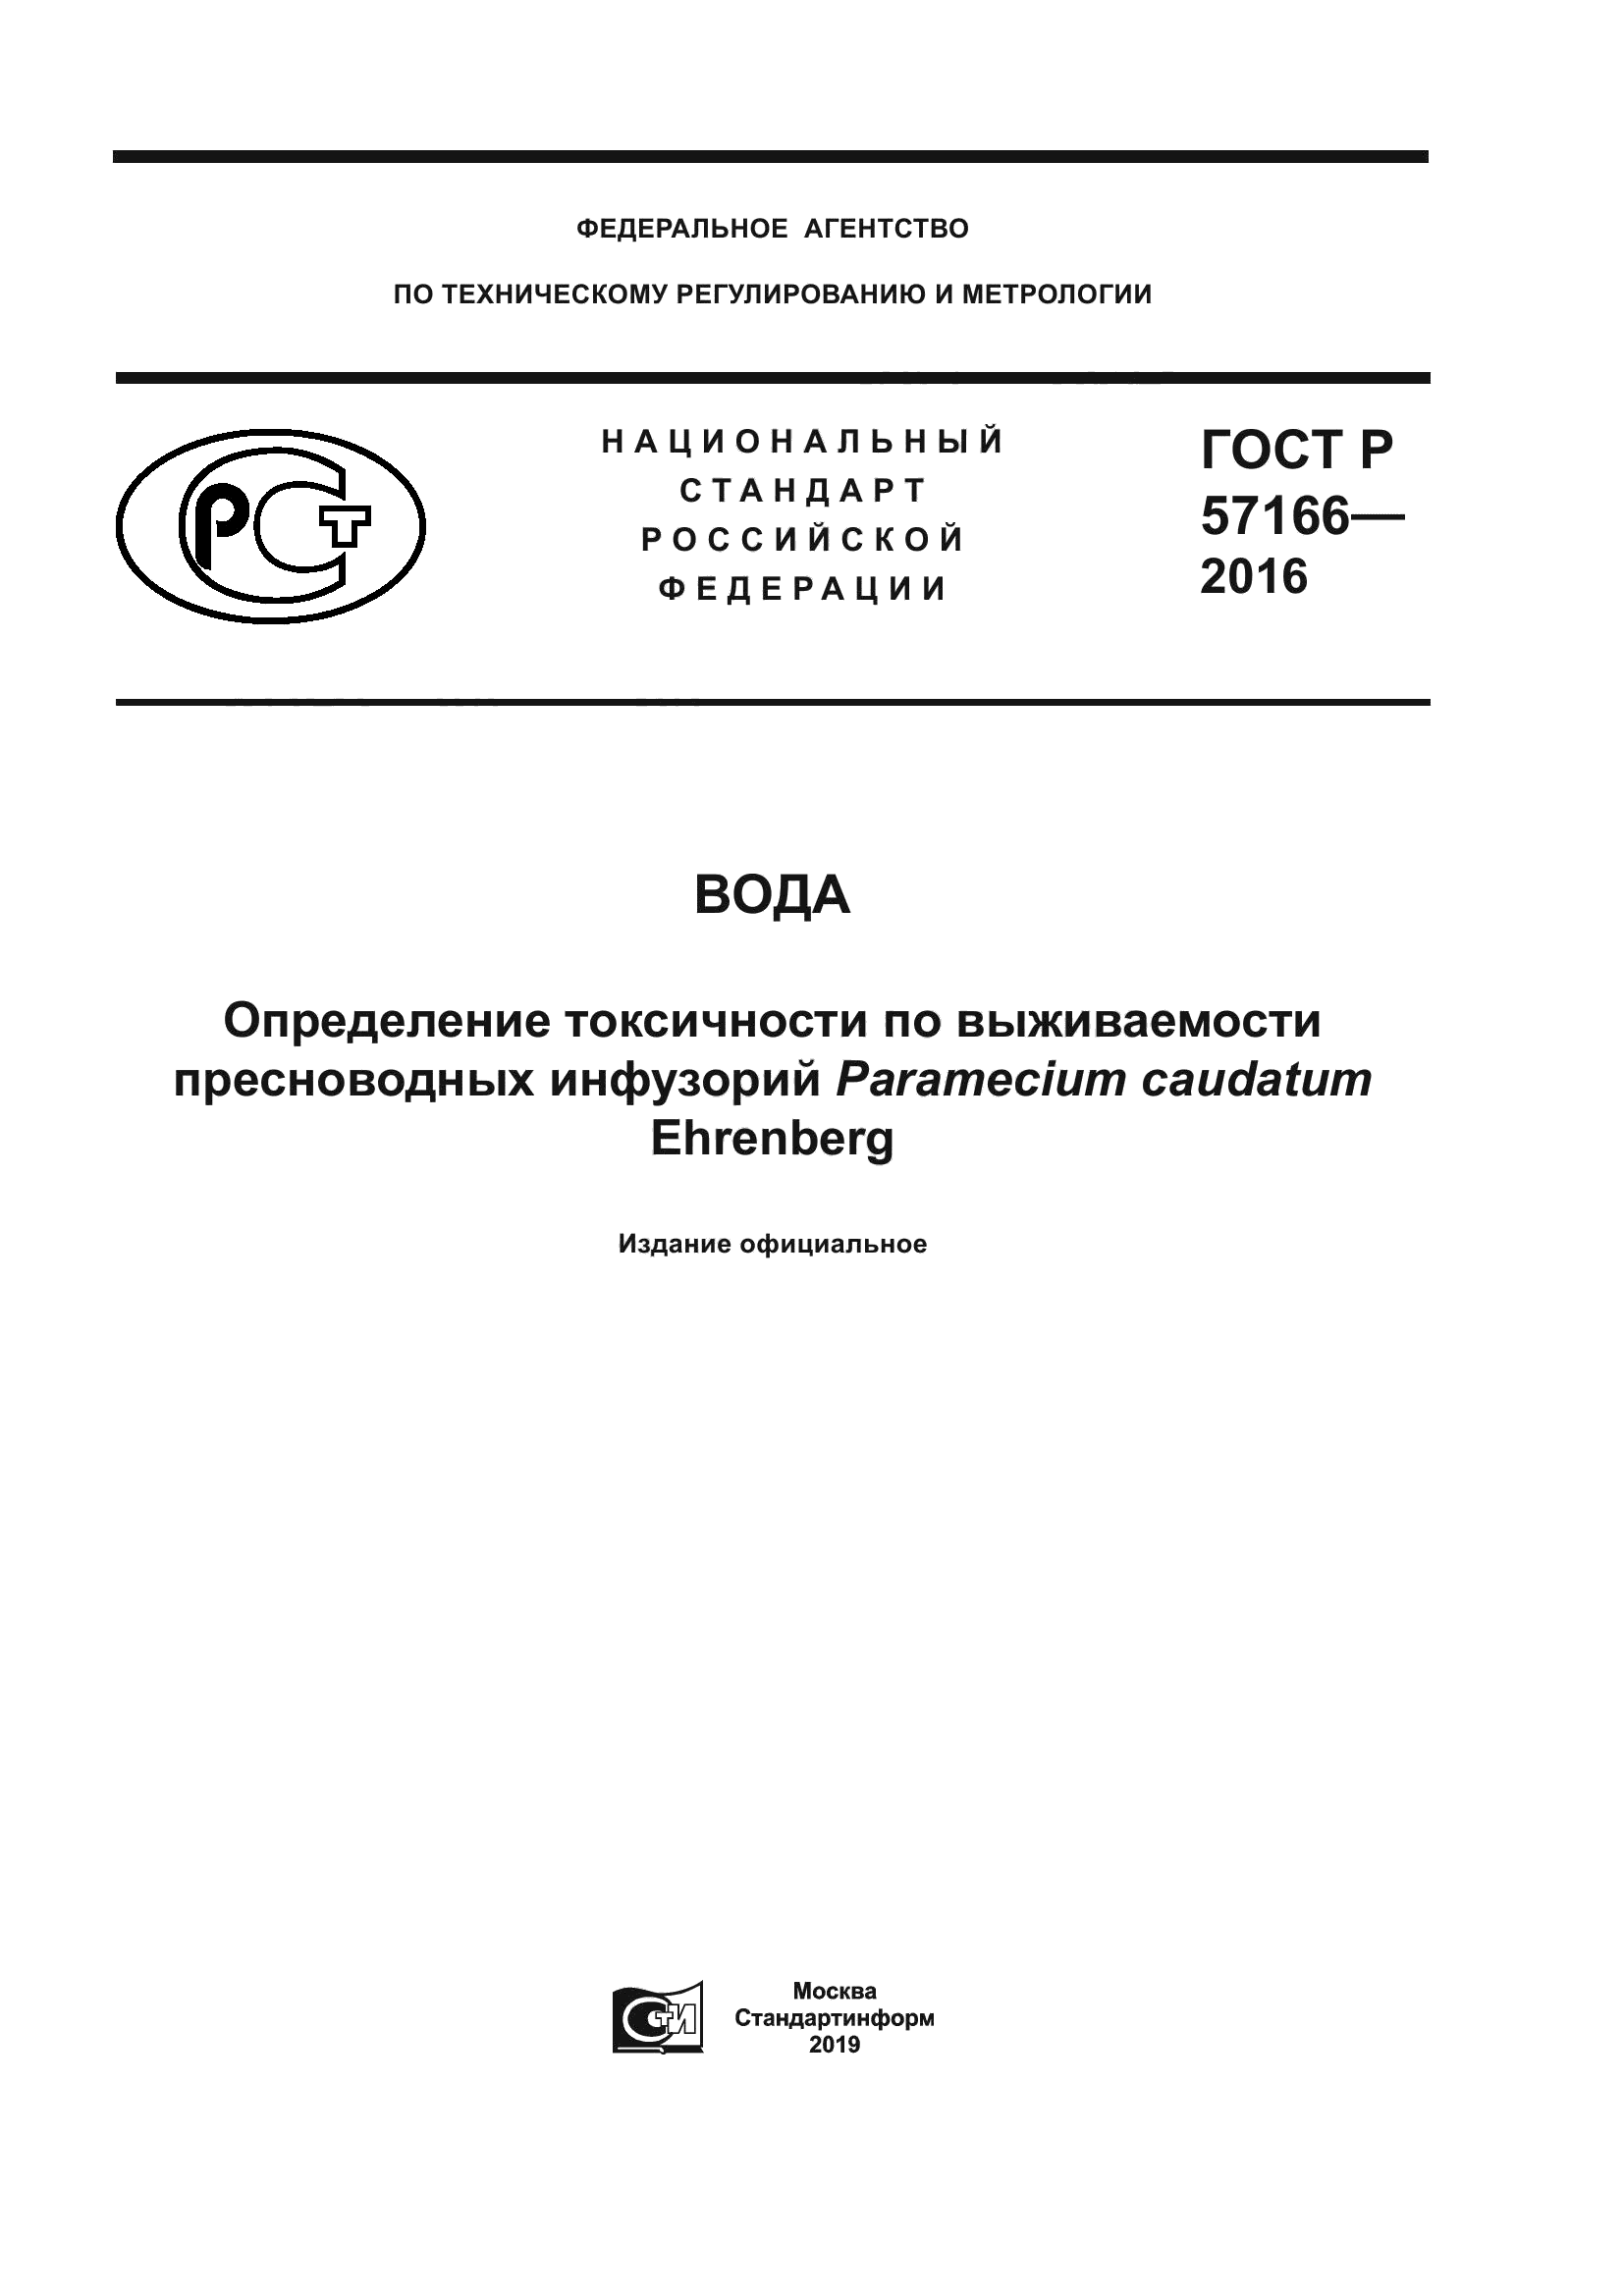 ГОСТ Р 57166-2016